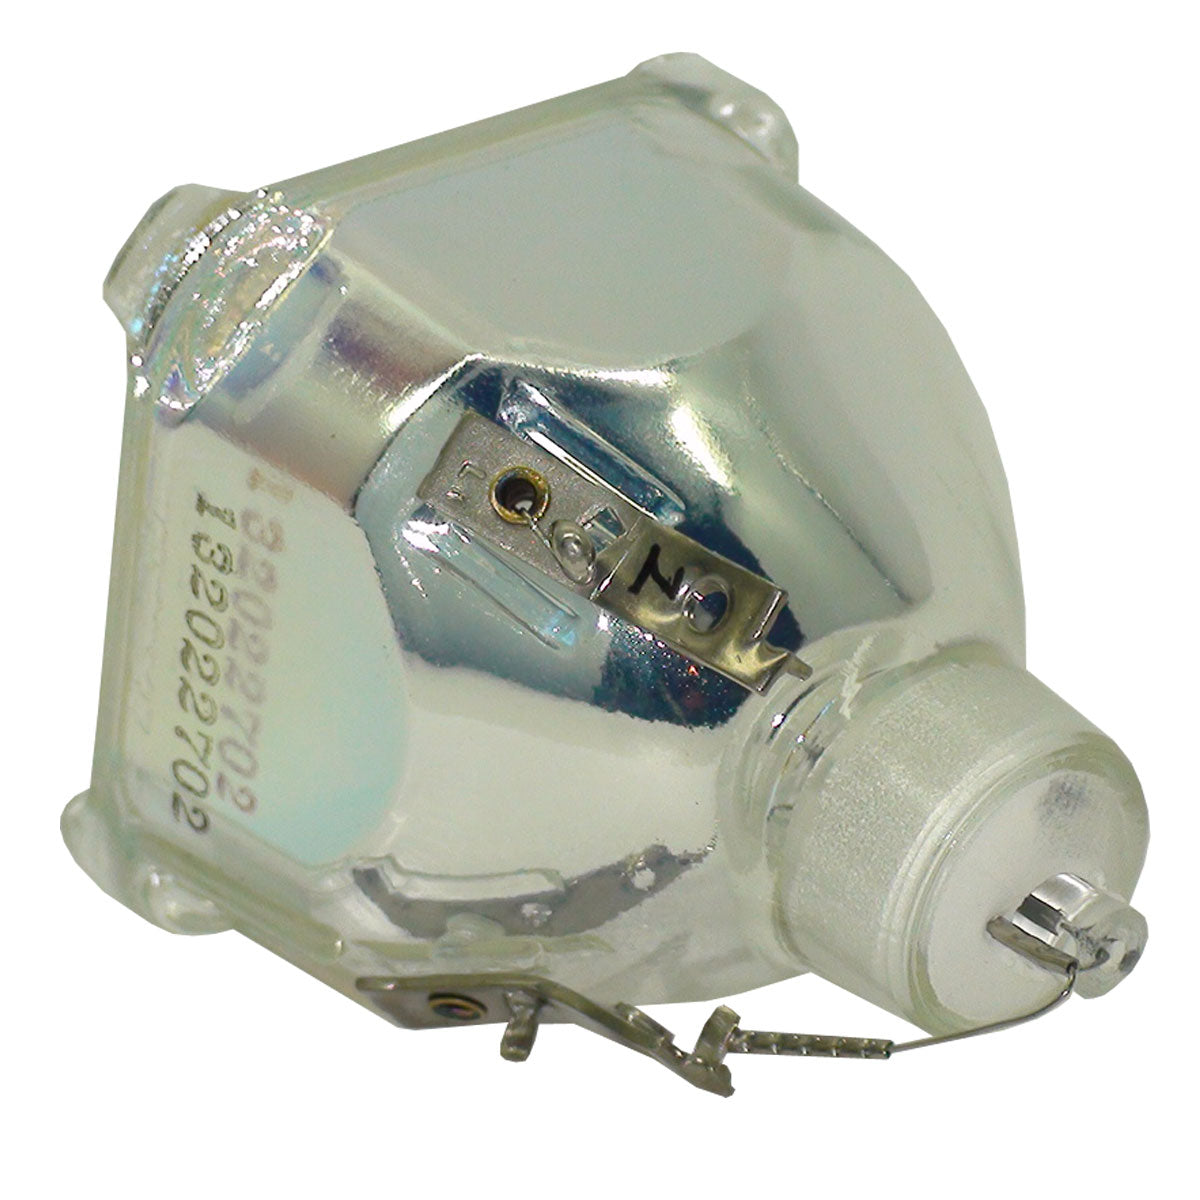 Boxlight CP322I-930 Philips Projector Bare Lamp